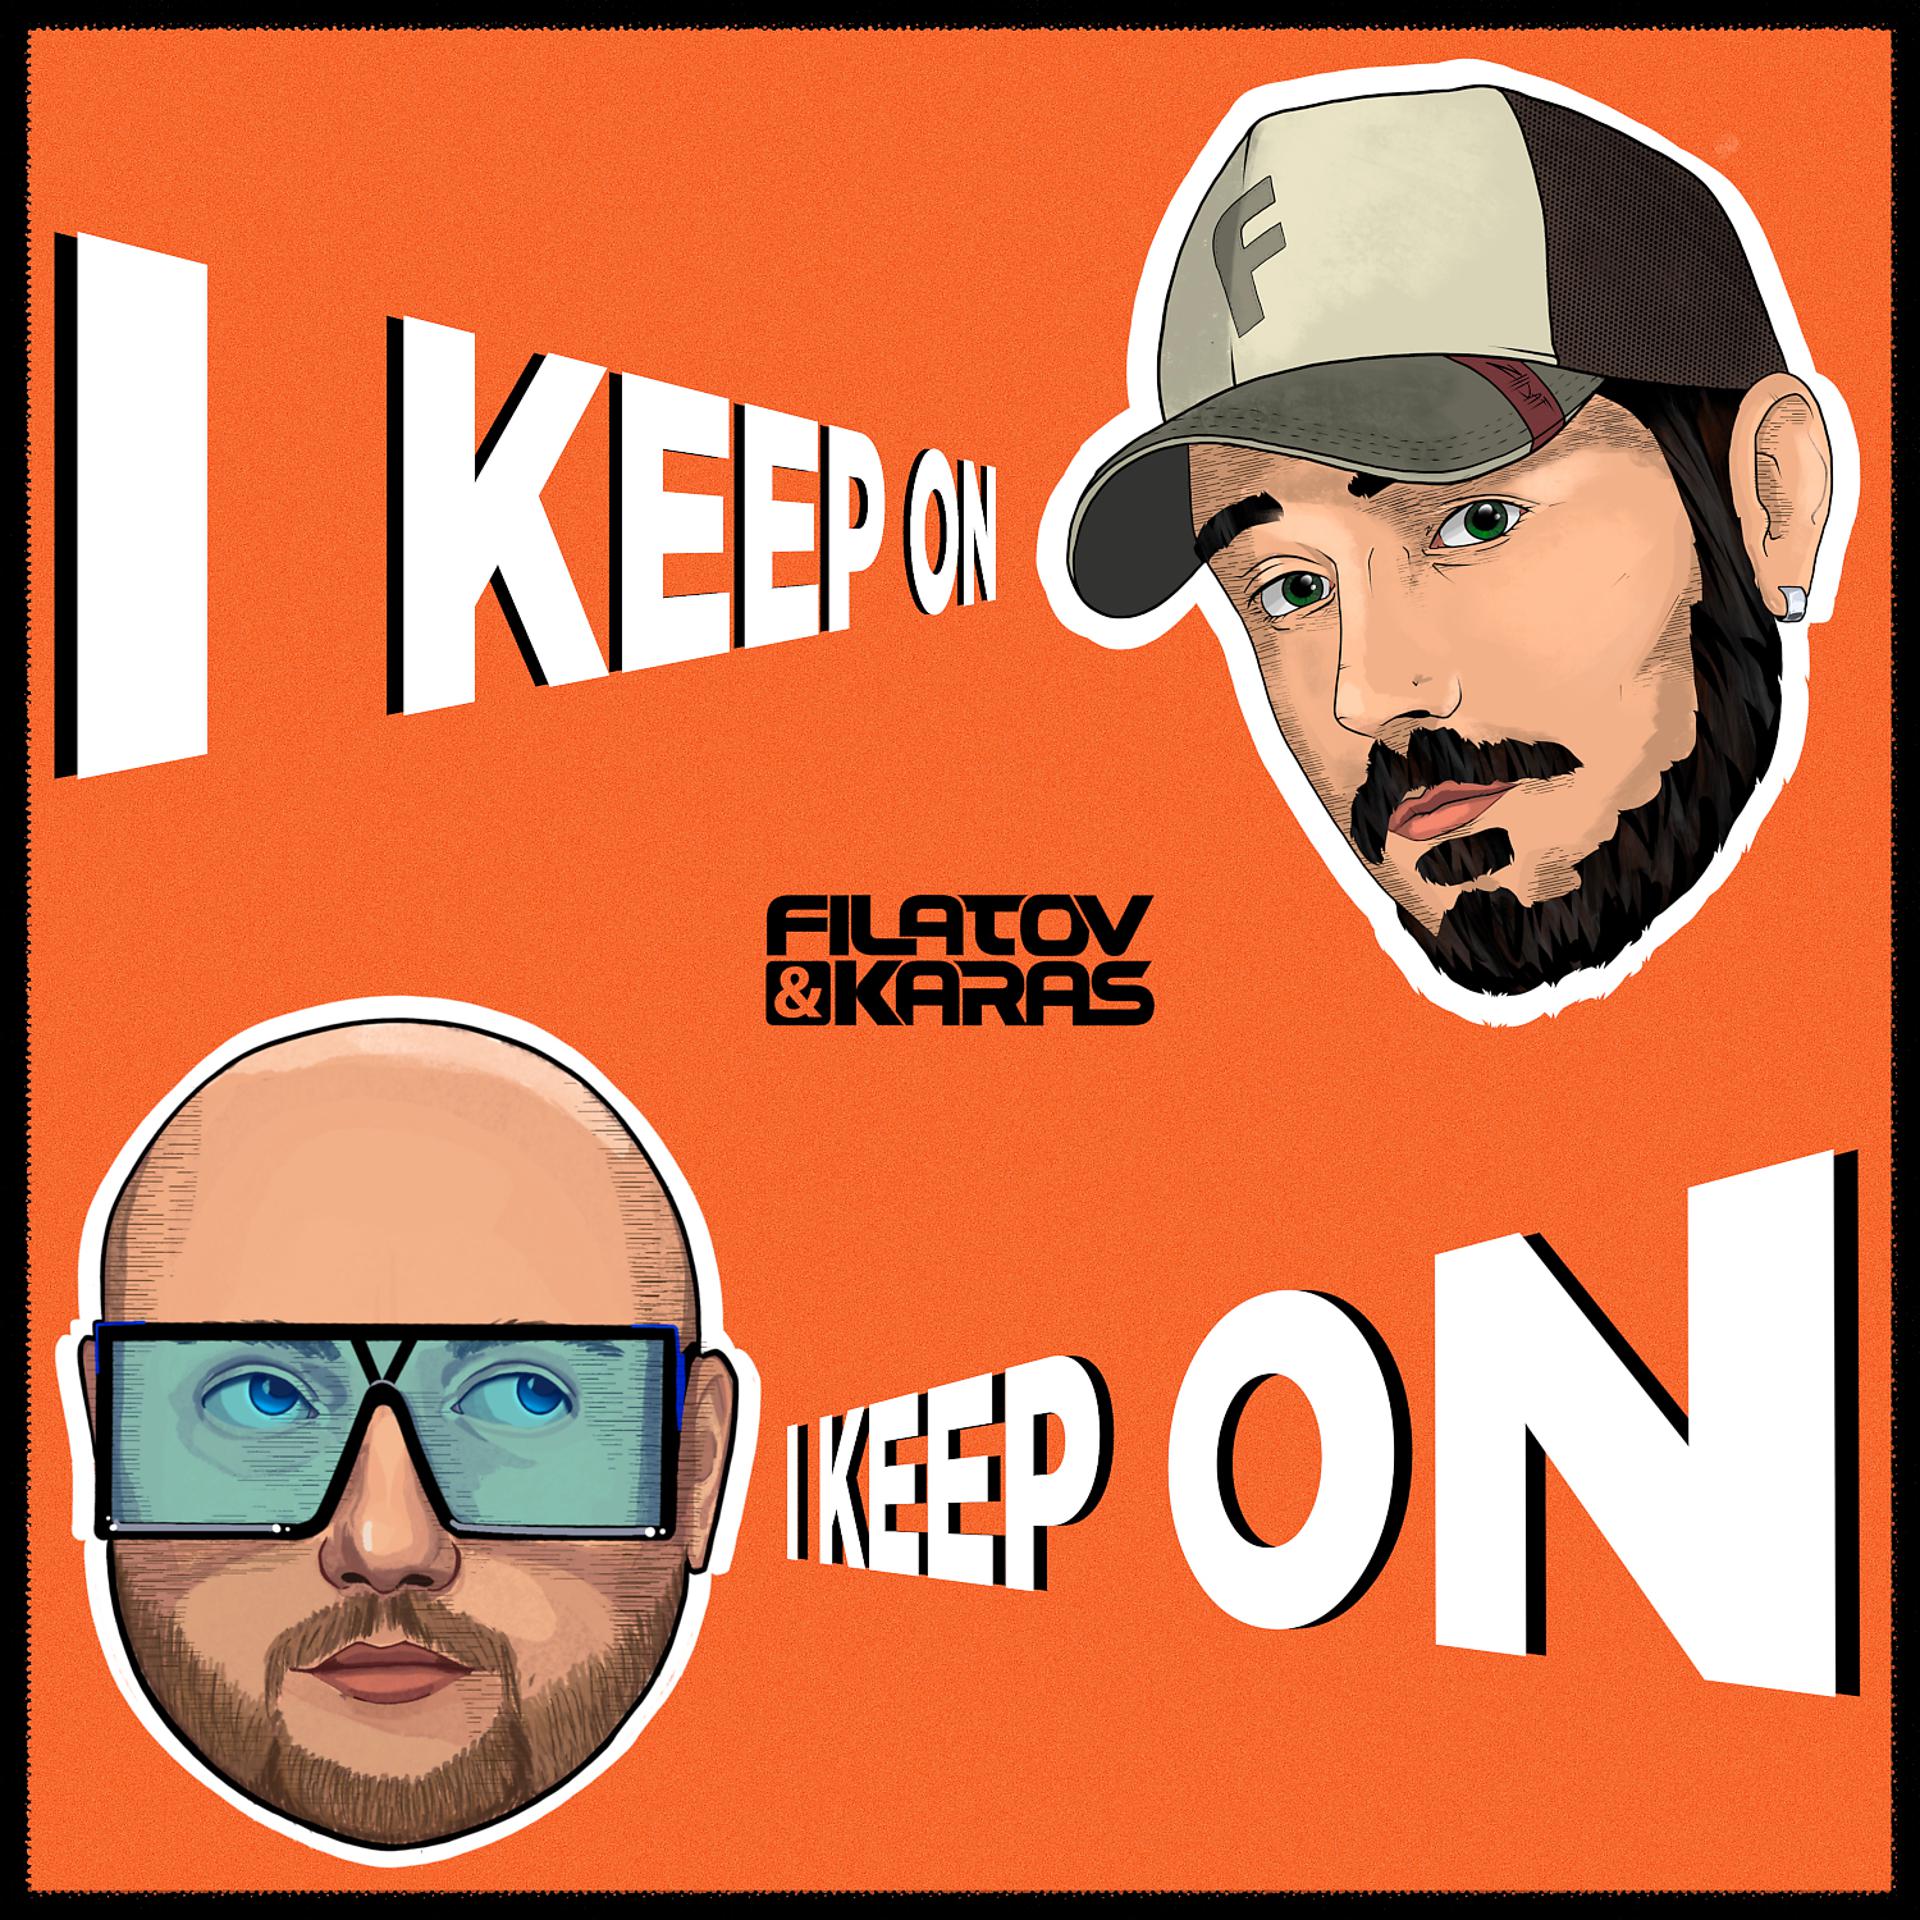 Постер к треку Filatov & Karas - I Keep On